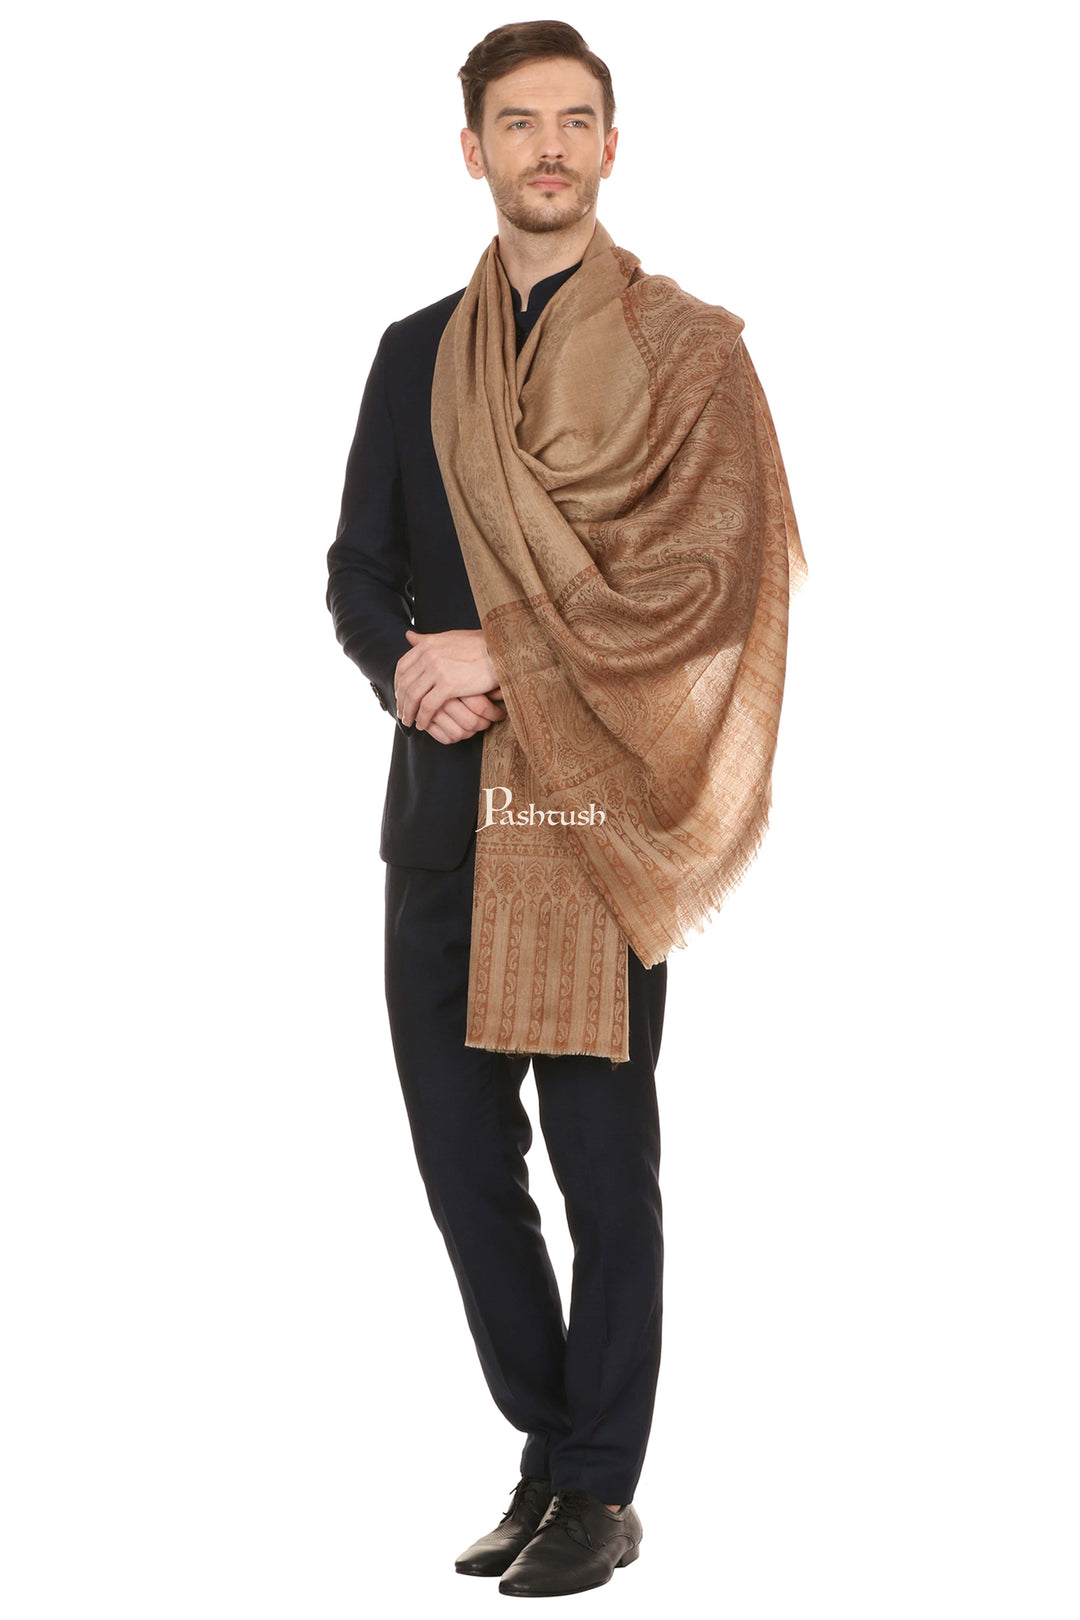 Pashtush India Mens Scarves Stoles and Mufflers Pashtush Mens Fine Wool Jacquard Stole, Beige